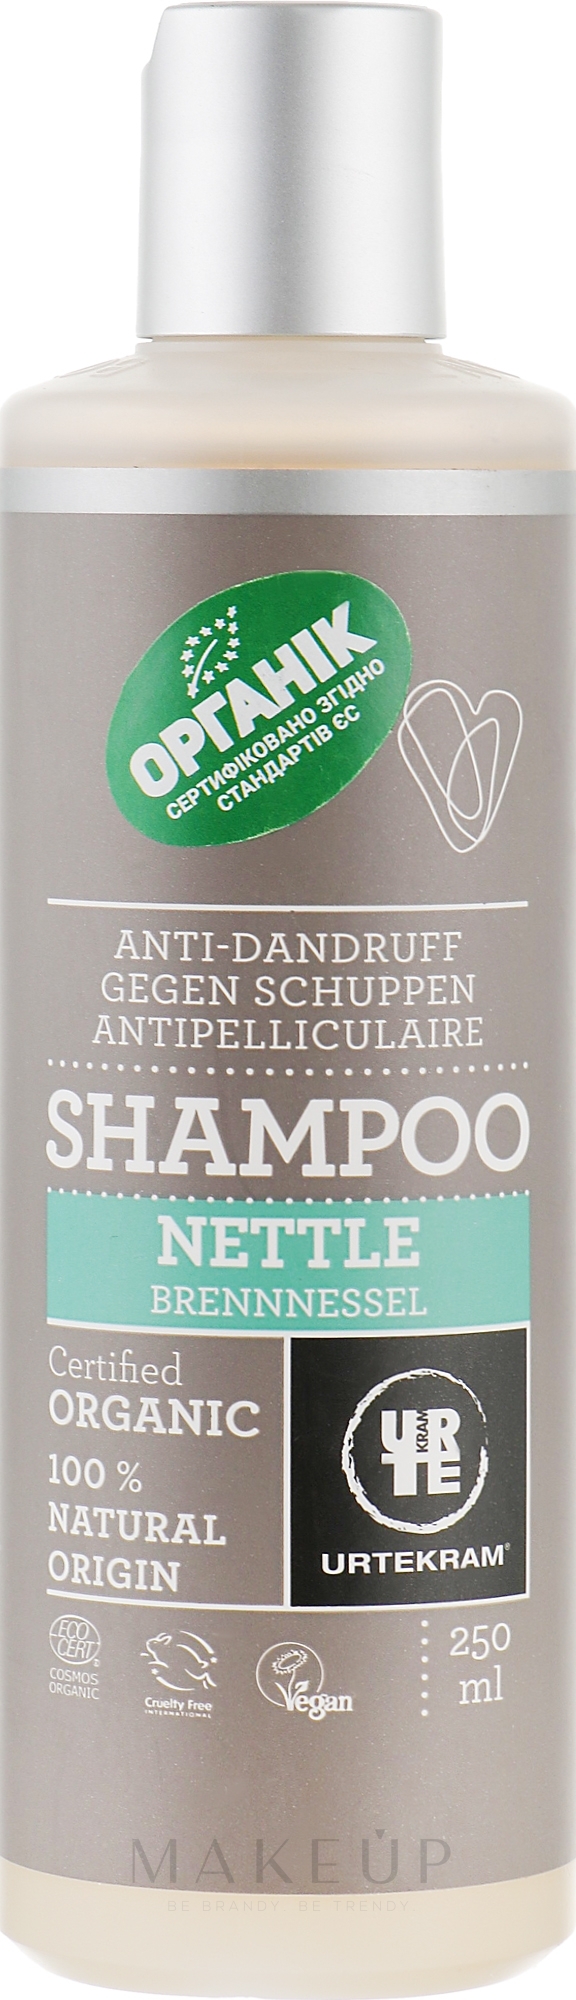 Anti-Schuppen Shampoo mit Brennnessel - Urtekram Nettle Anti-Dandruff Shampoo — Foto 250 ml